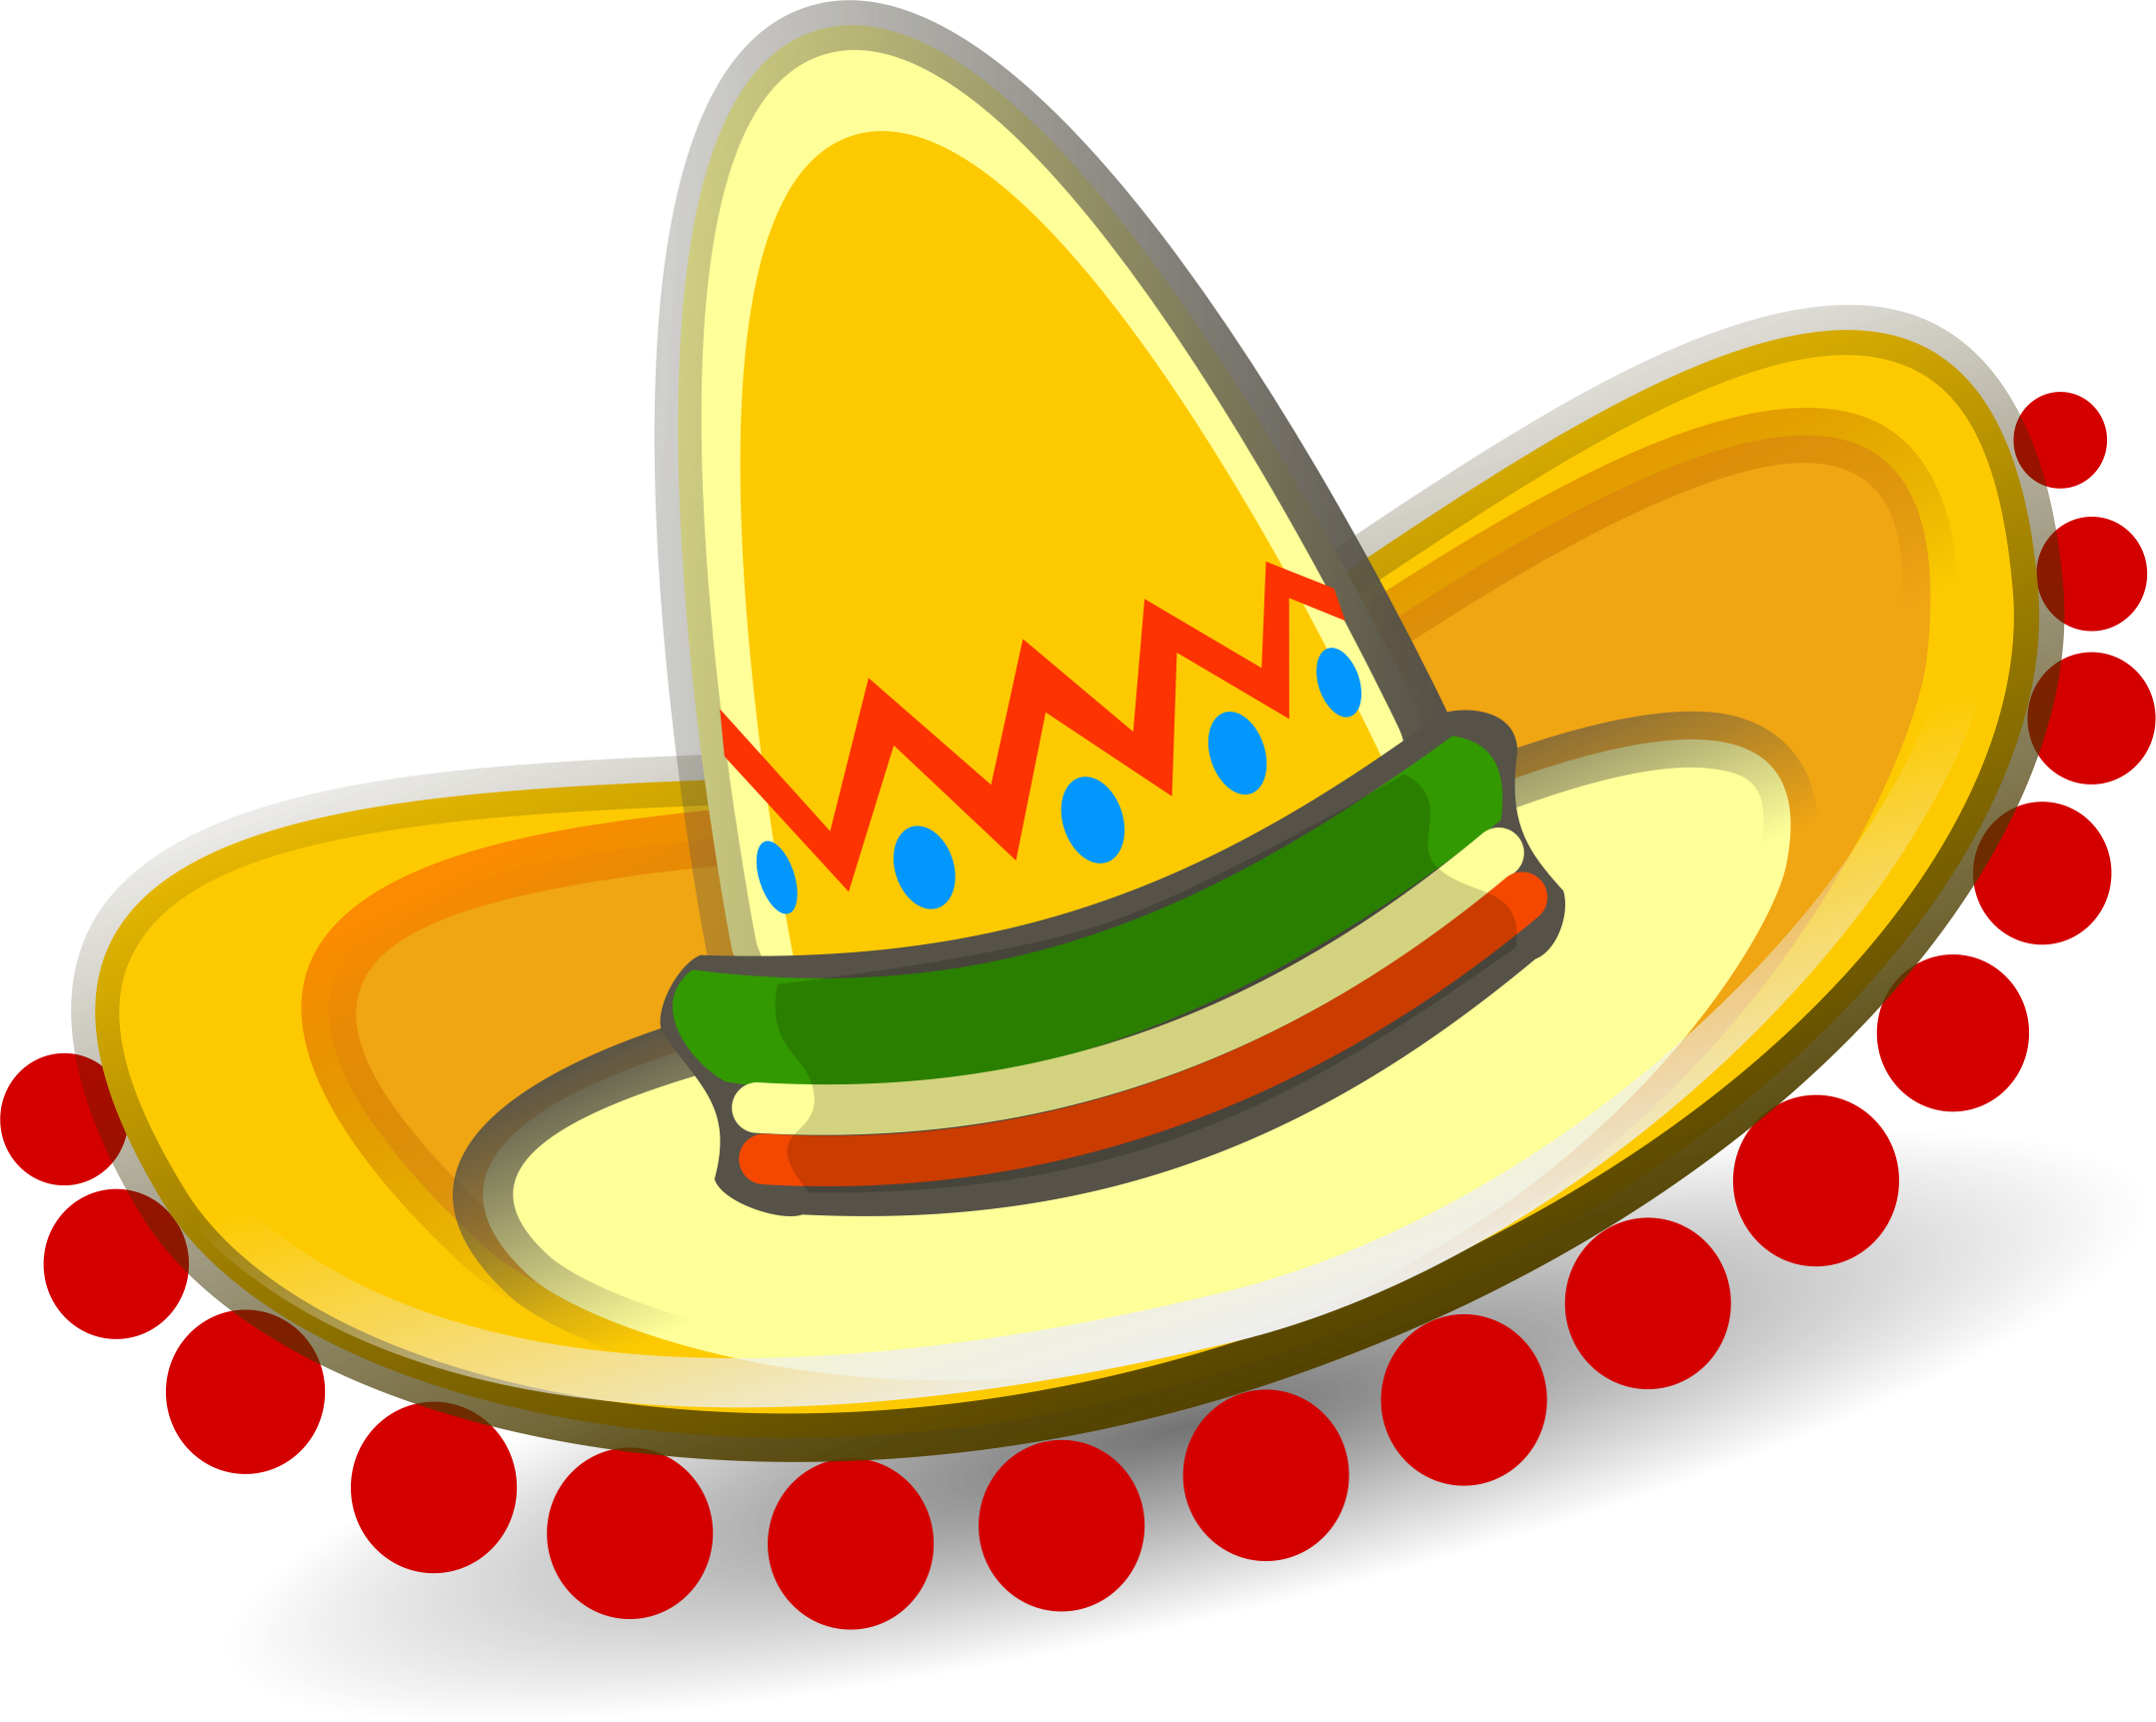 Sombrero Mexican hat graphic